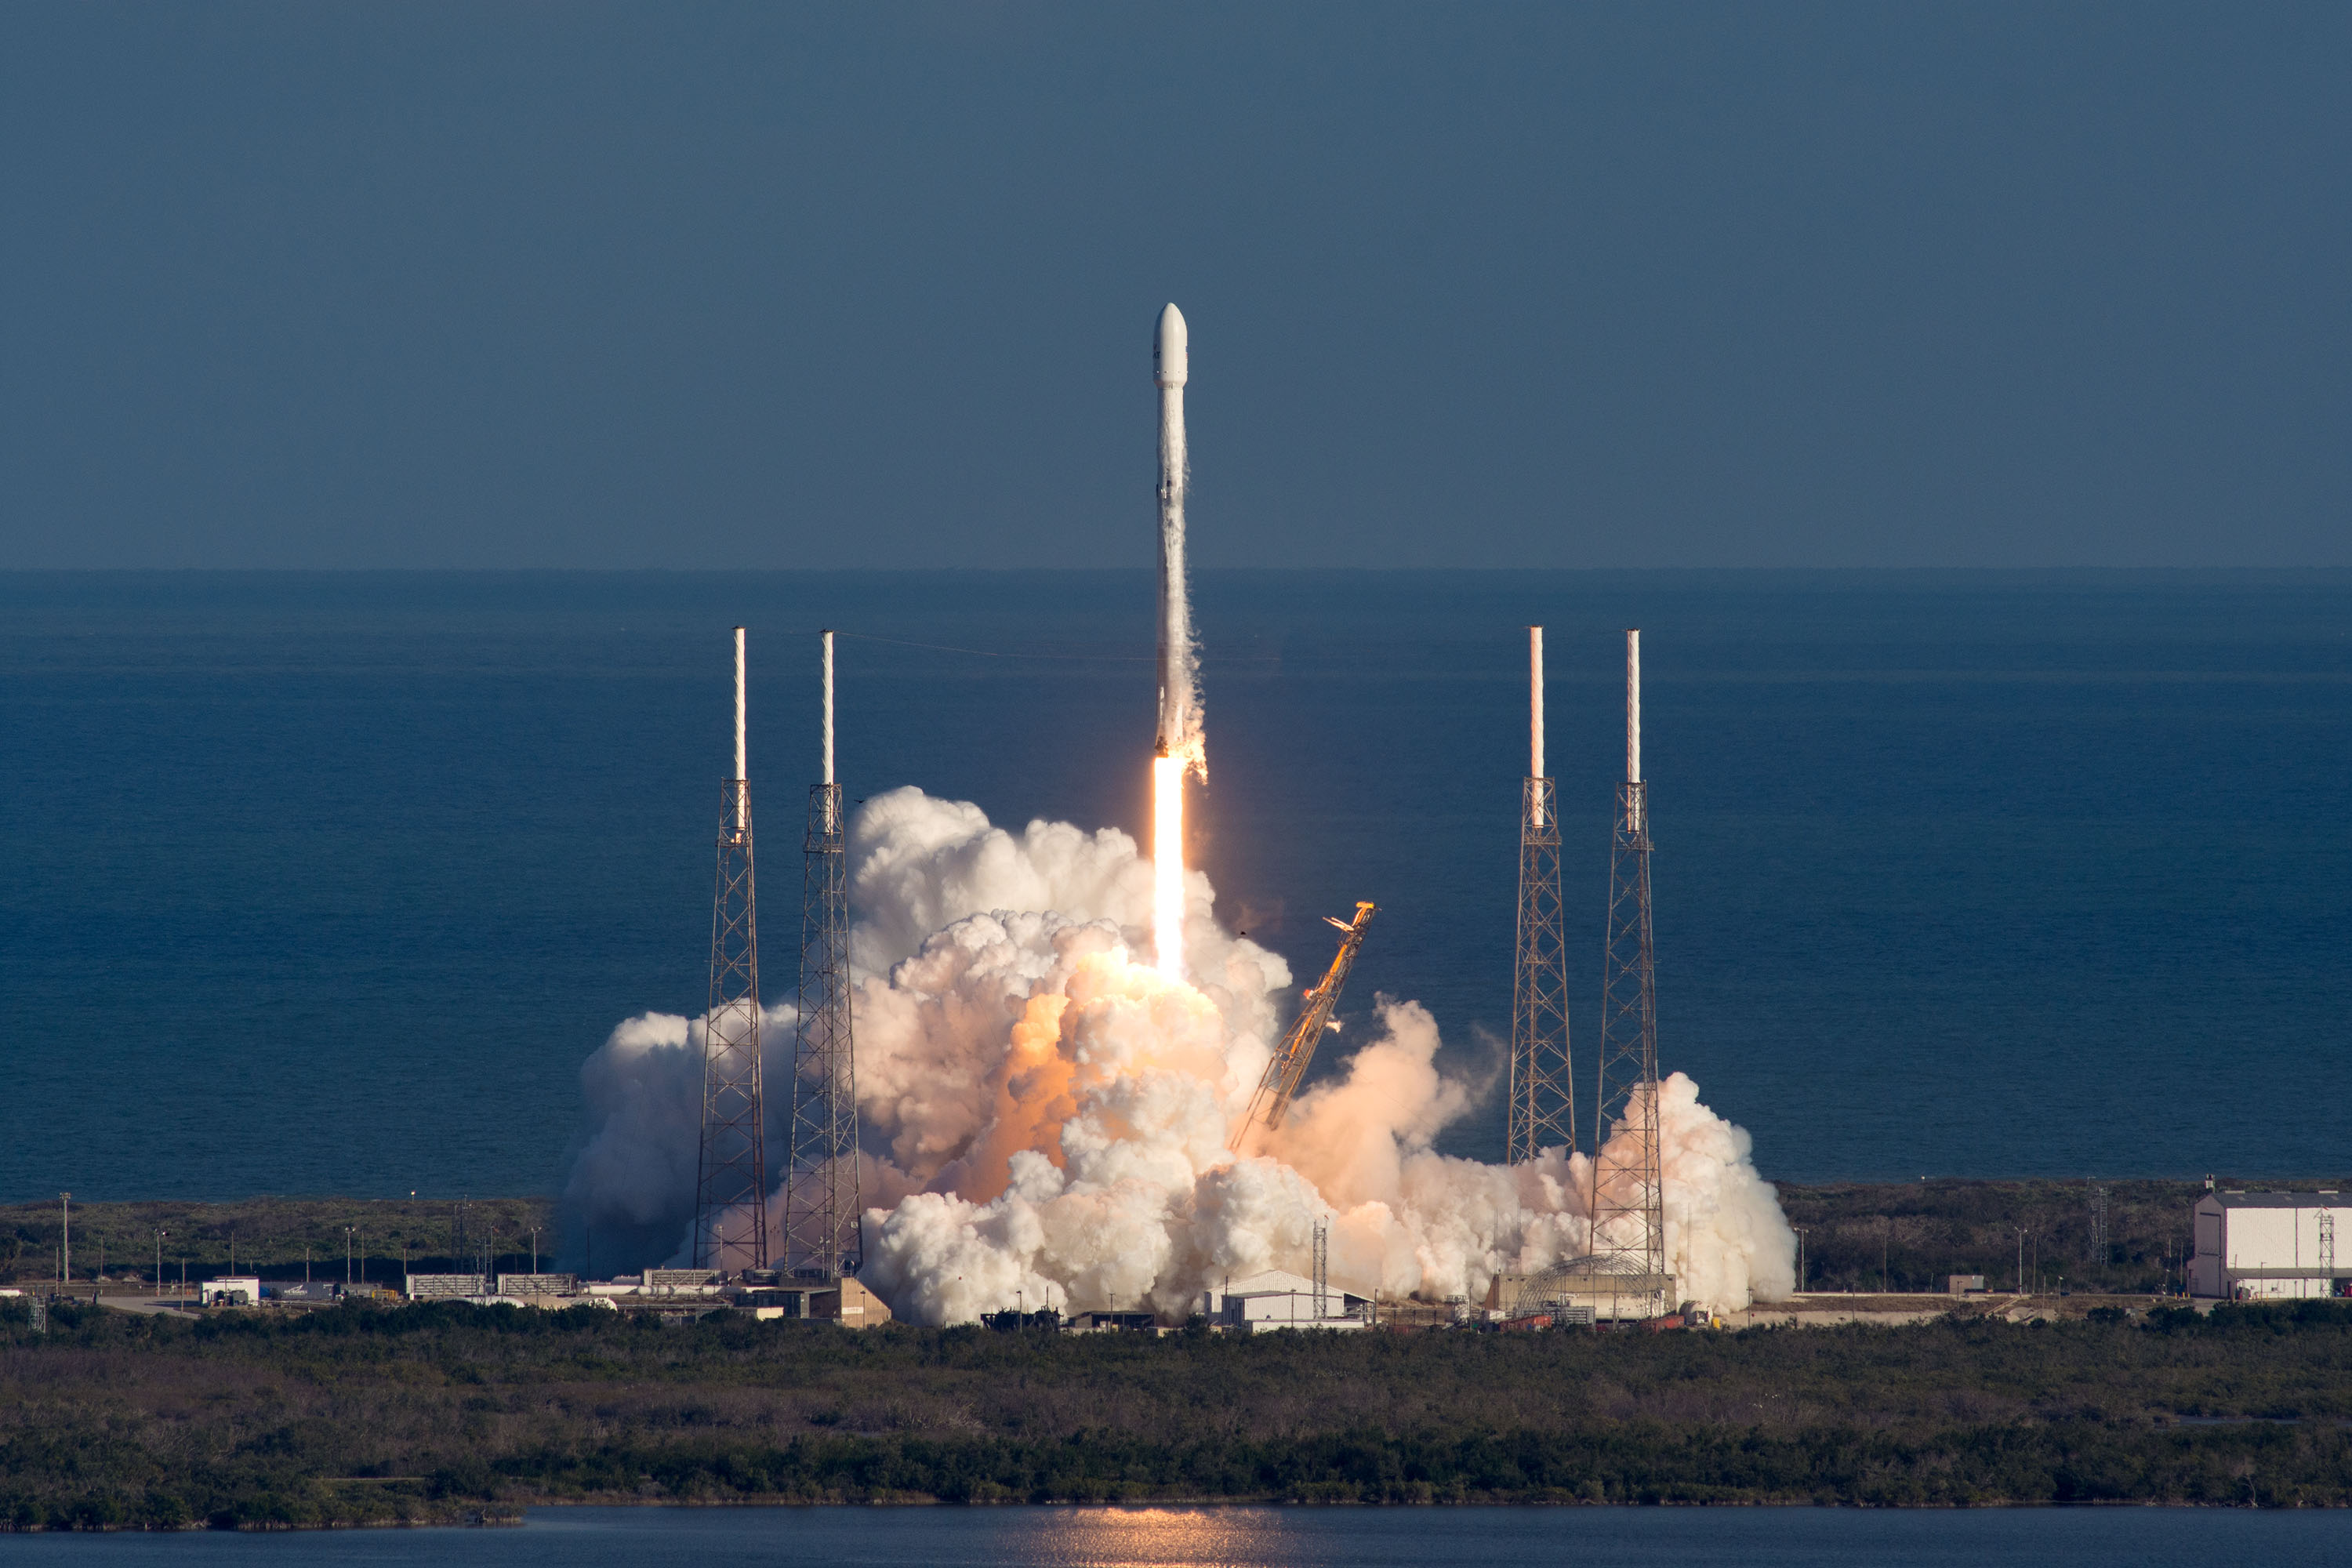 Falcon 9 SES-16 / GovSat-1